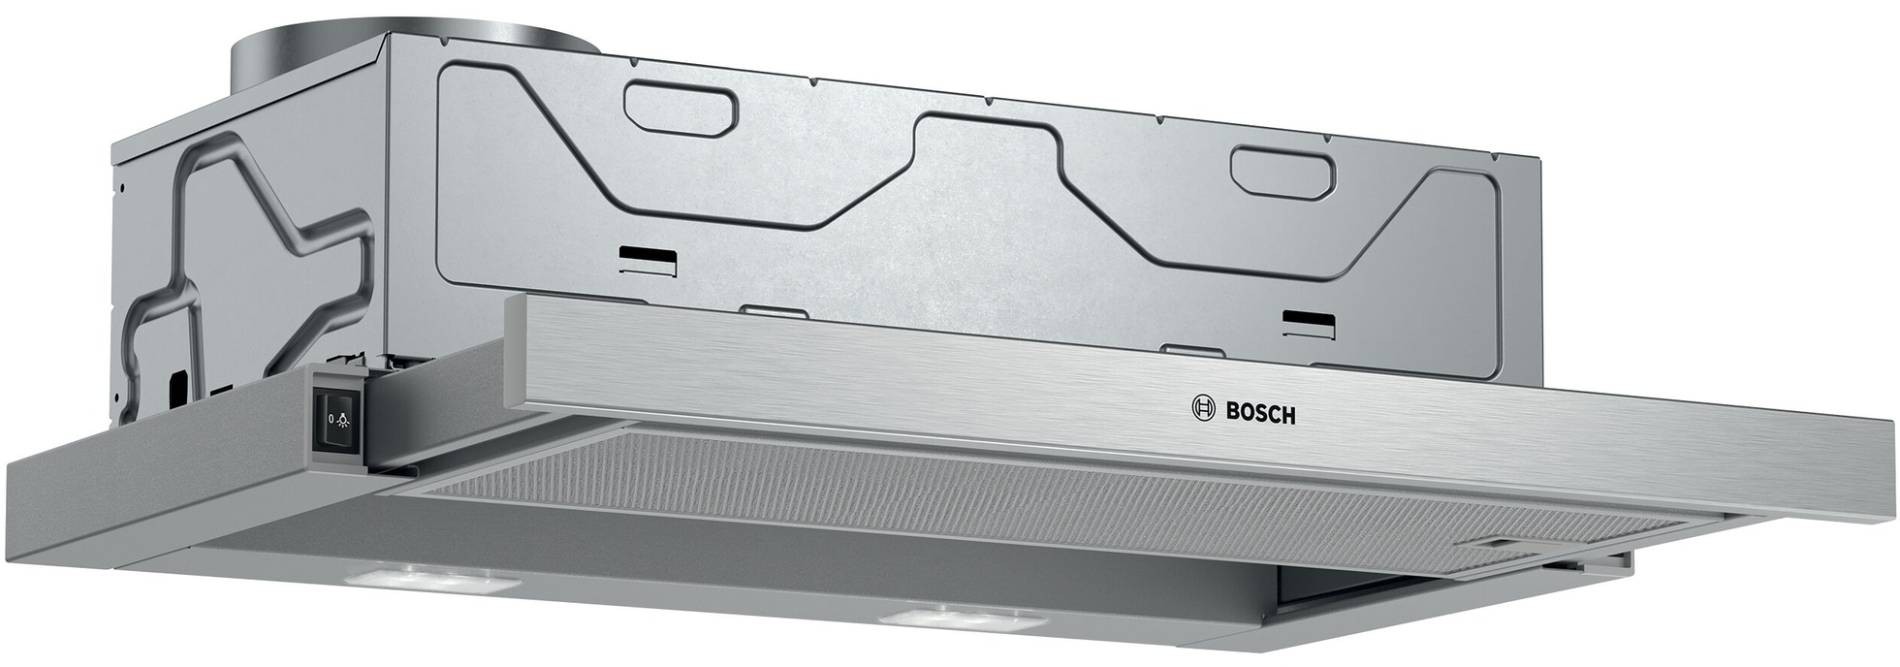 BOSCH Hotte tiroir Série 2 67dB 60cm Inox - DFM064W54